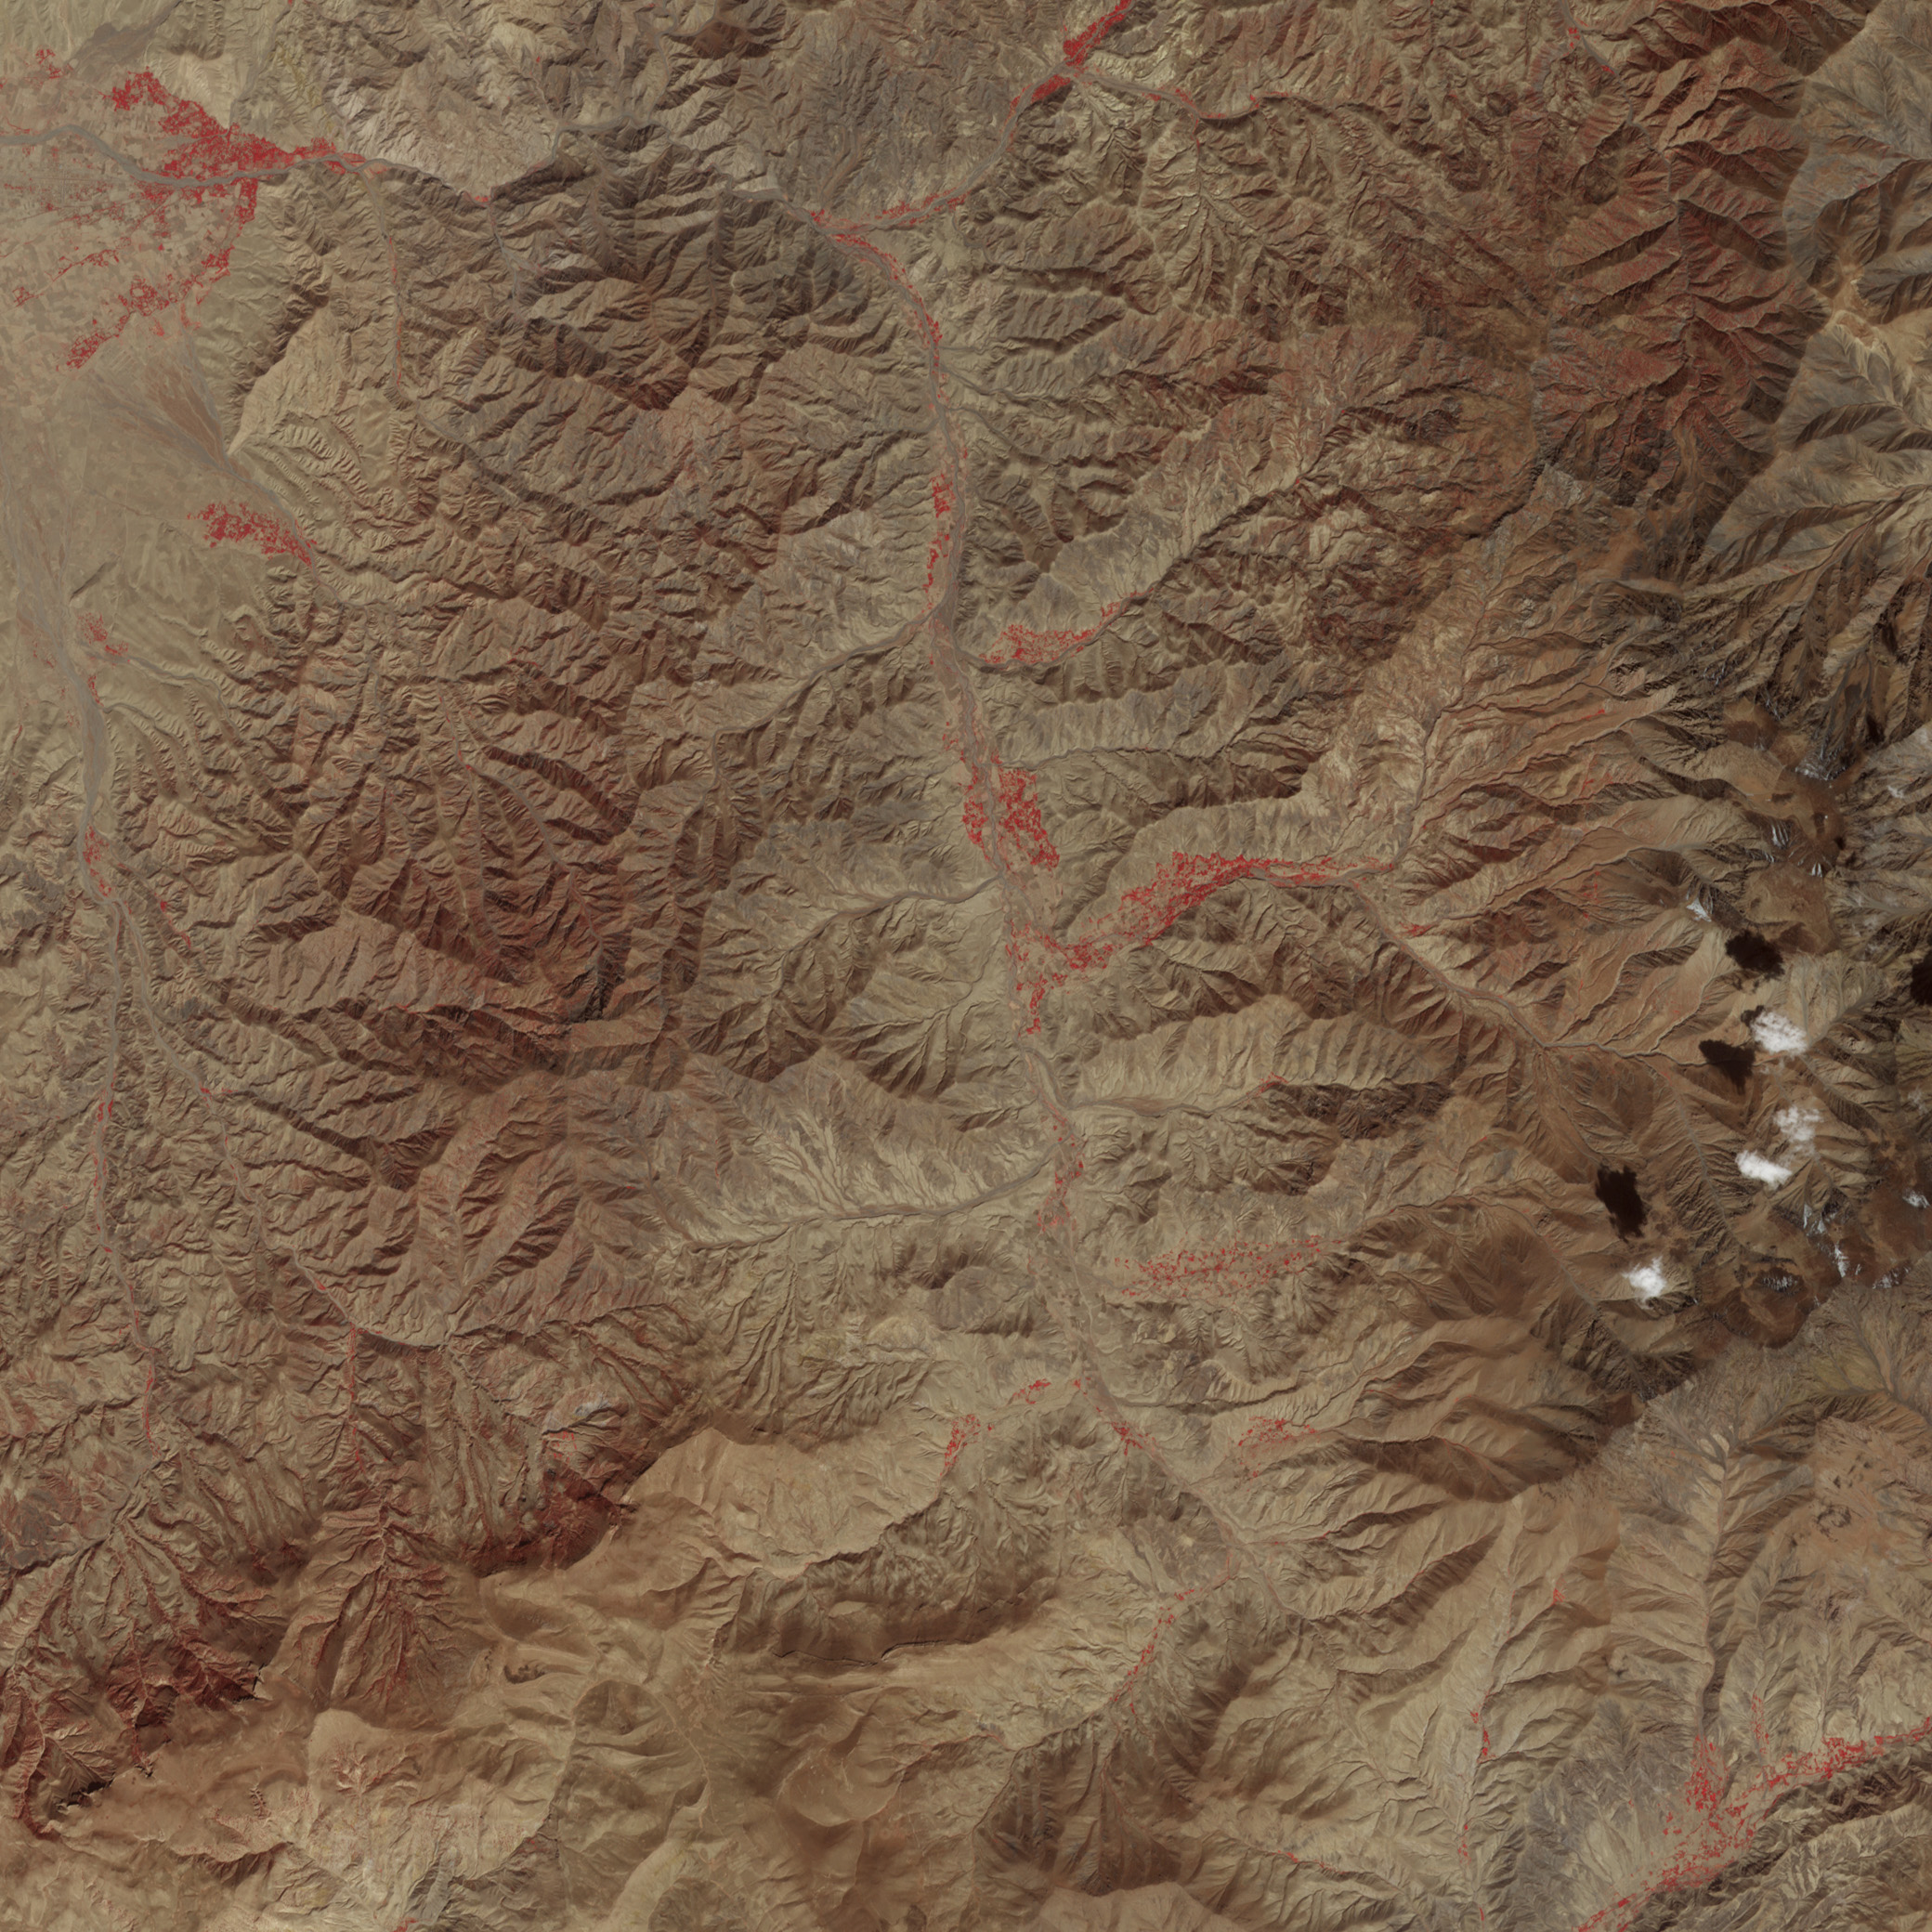 Earthquake Hits Hindu Kush, Afghanistan - related image preview